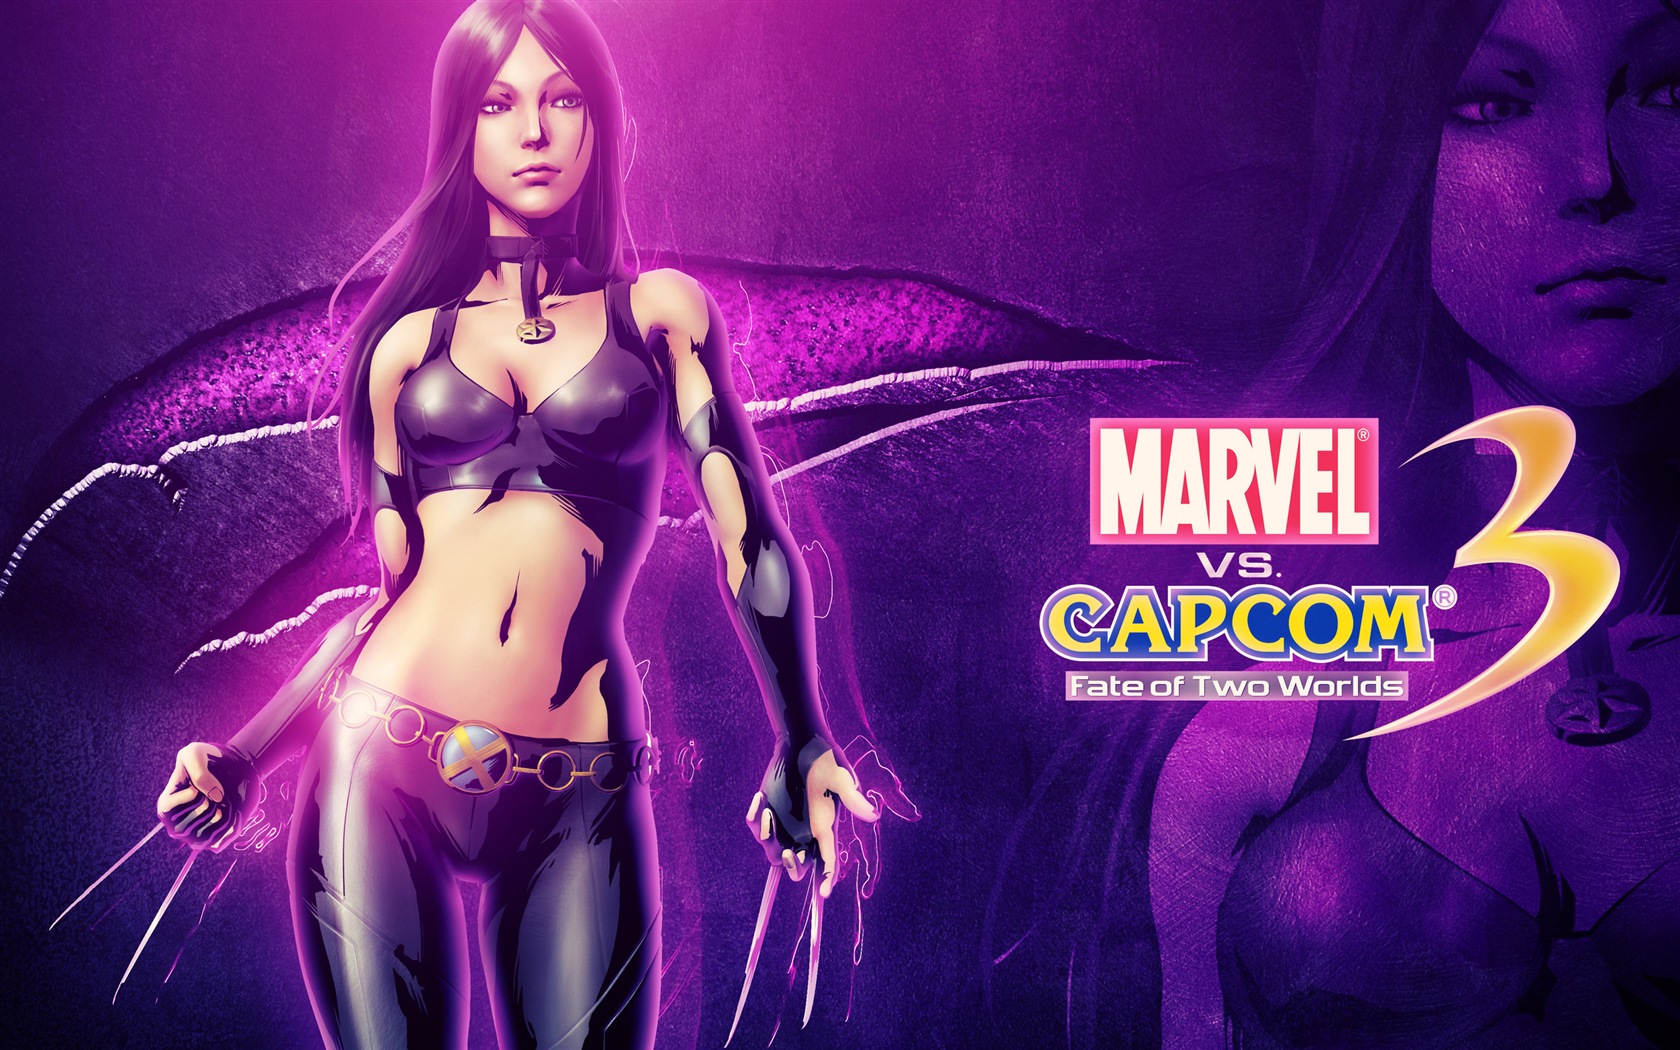 Marvel VS. Capcom 3: Fate of Two Worlds 漫画英雄VS.卡普空3 高清游戏壁纸10 - 1680x1050